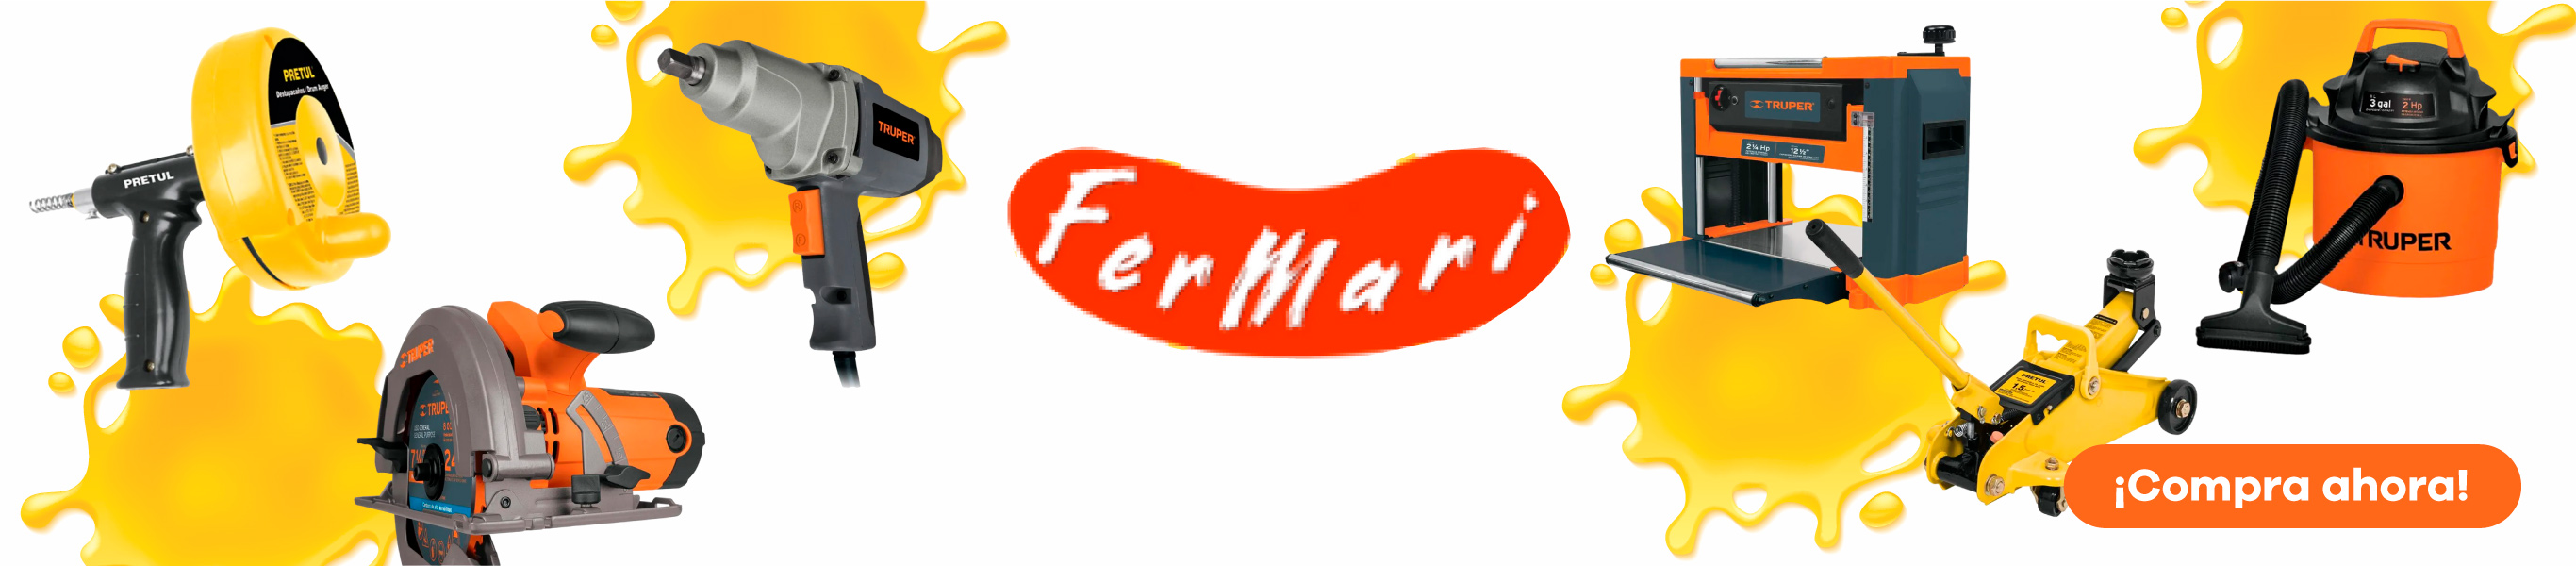 Ferretería Fermari